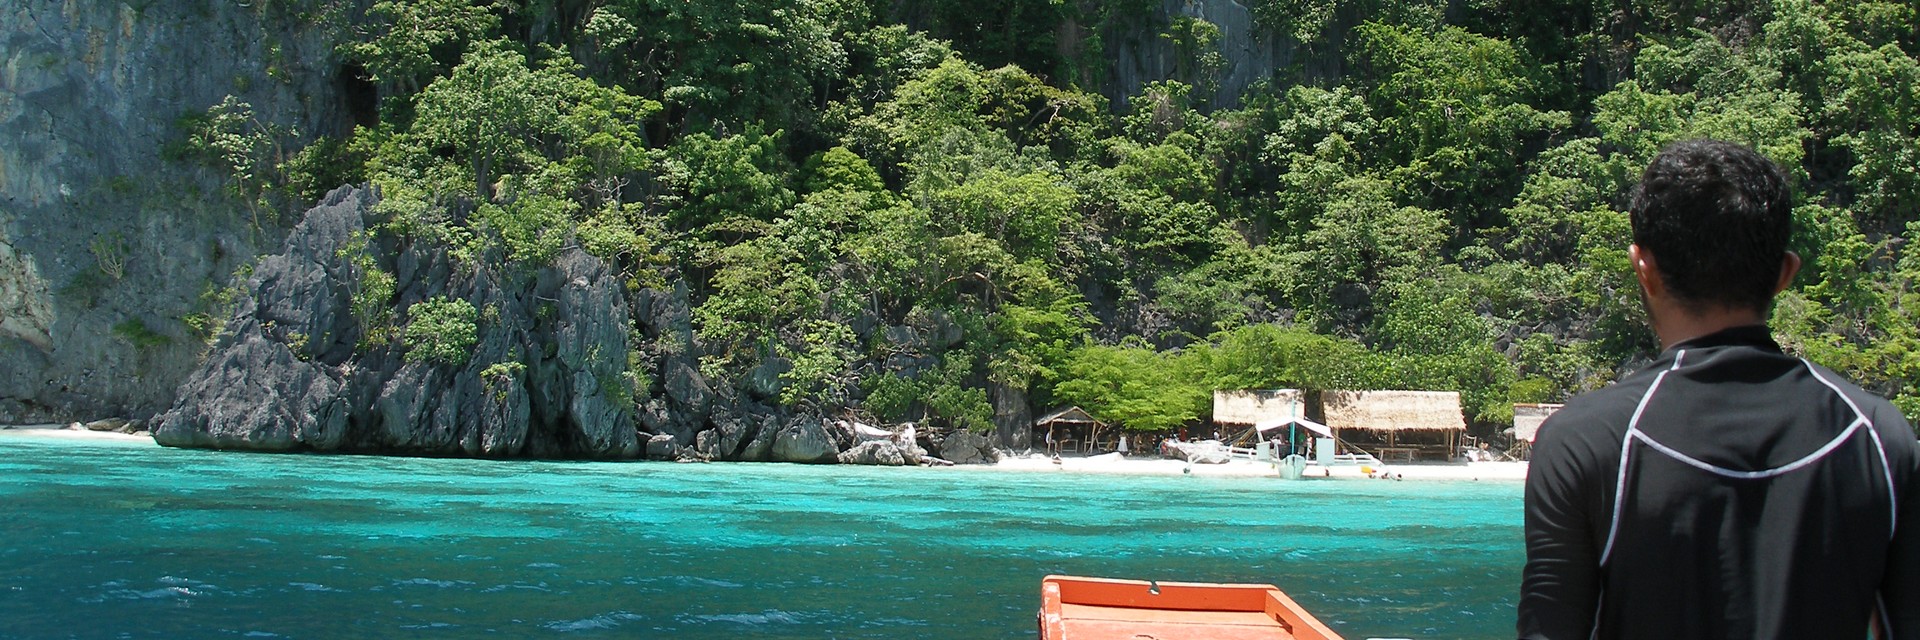 filipíny coron island